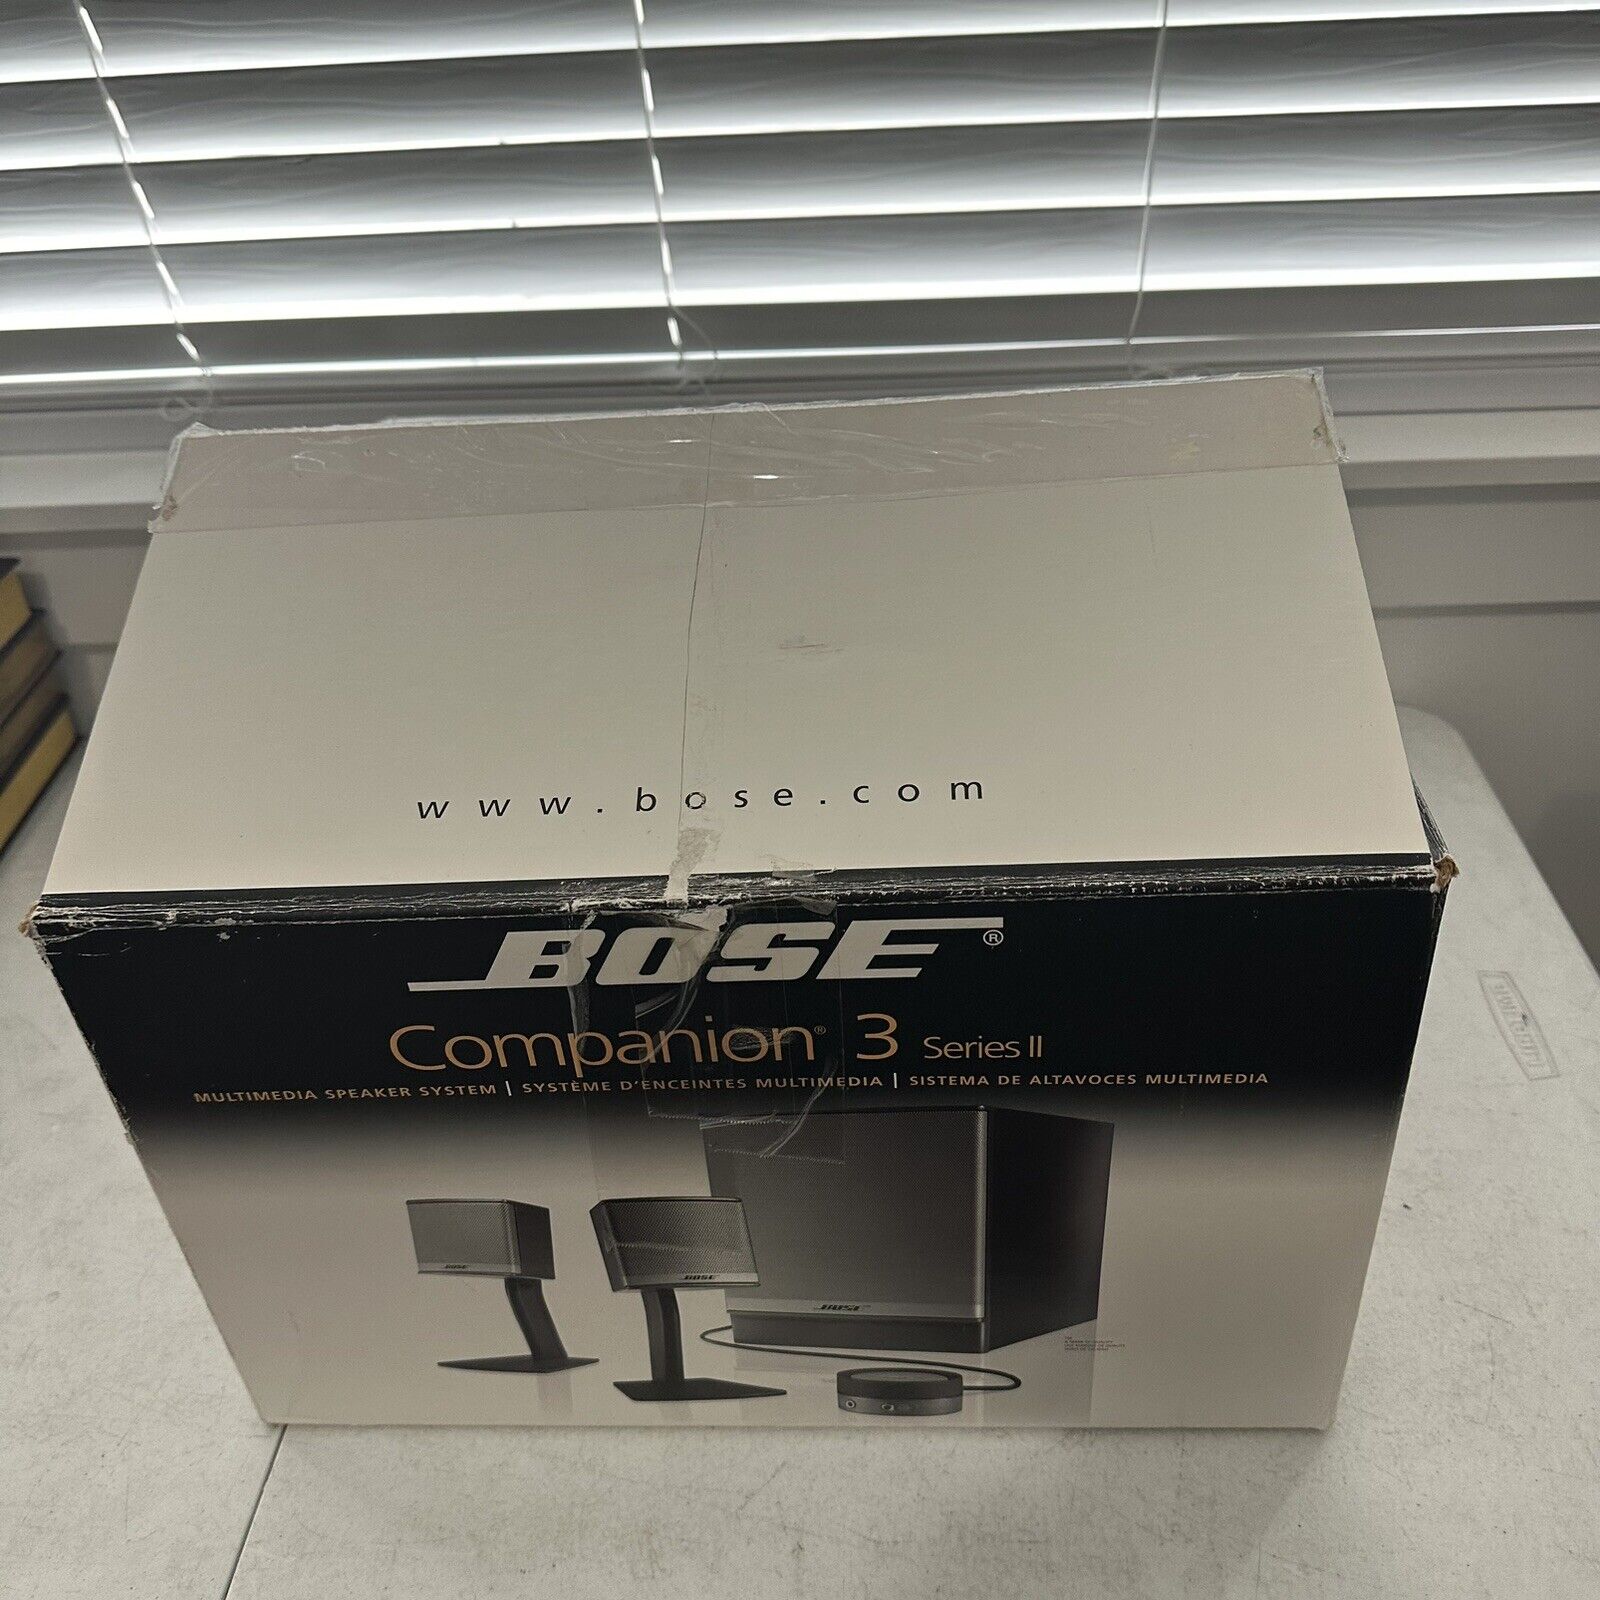 New Bose Companion 3 SERIES II Multimedia Speaker System Open Box Never Used